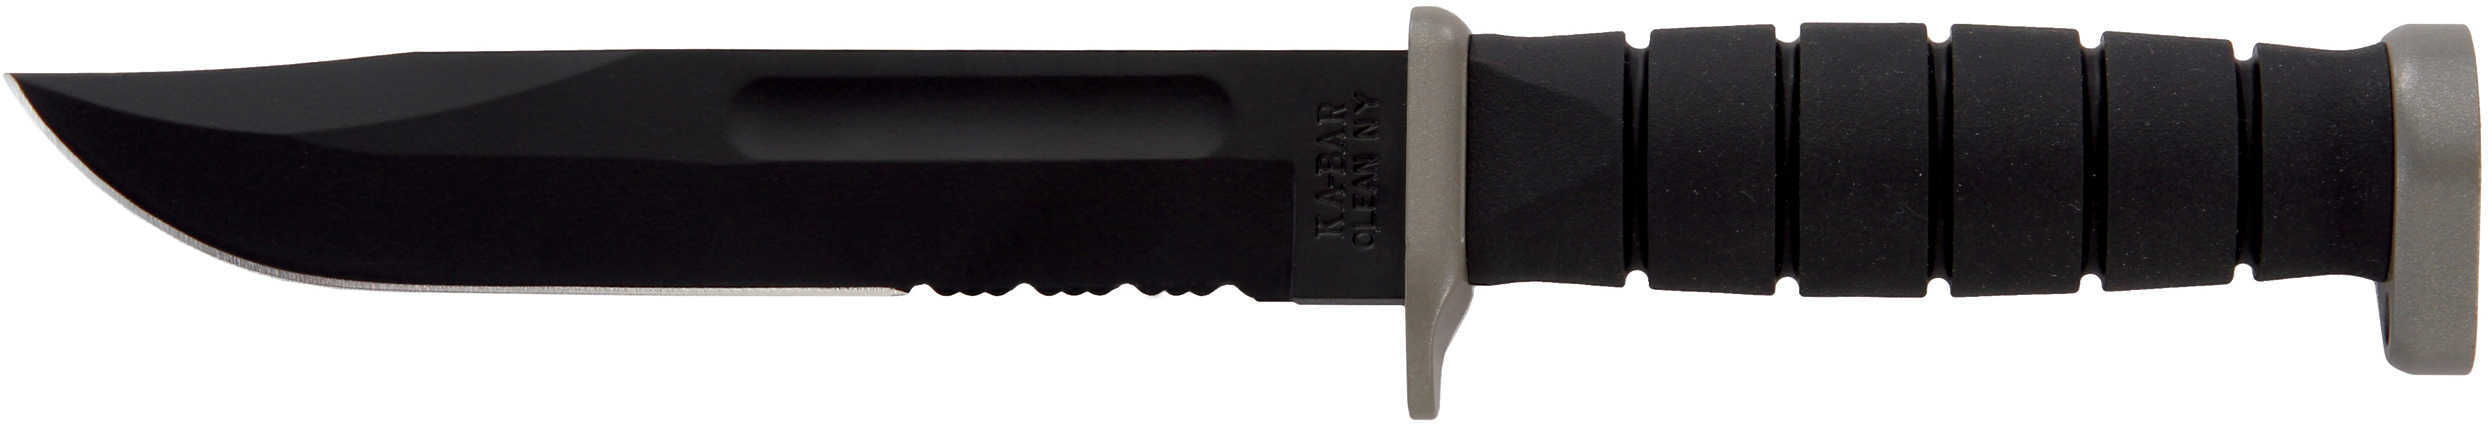 Ka-Bar D2 Fighting/Utility Knife 2-1282-6